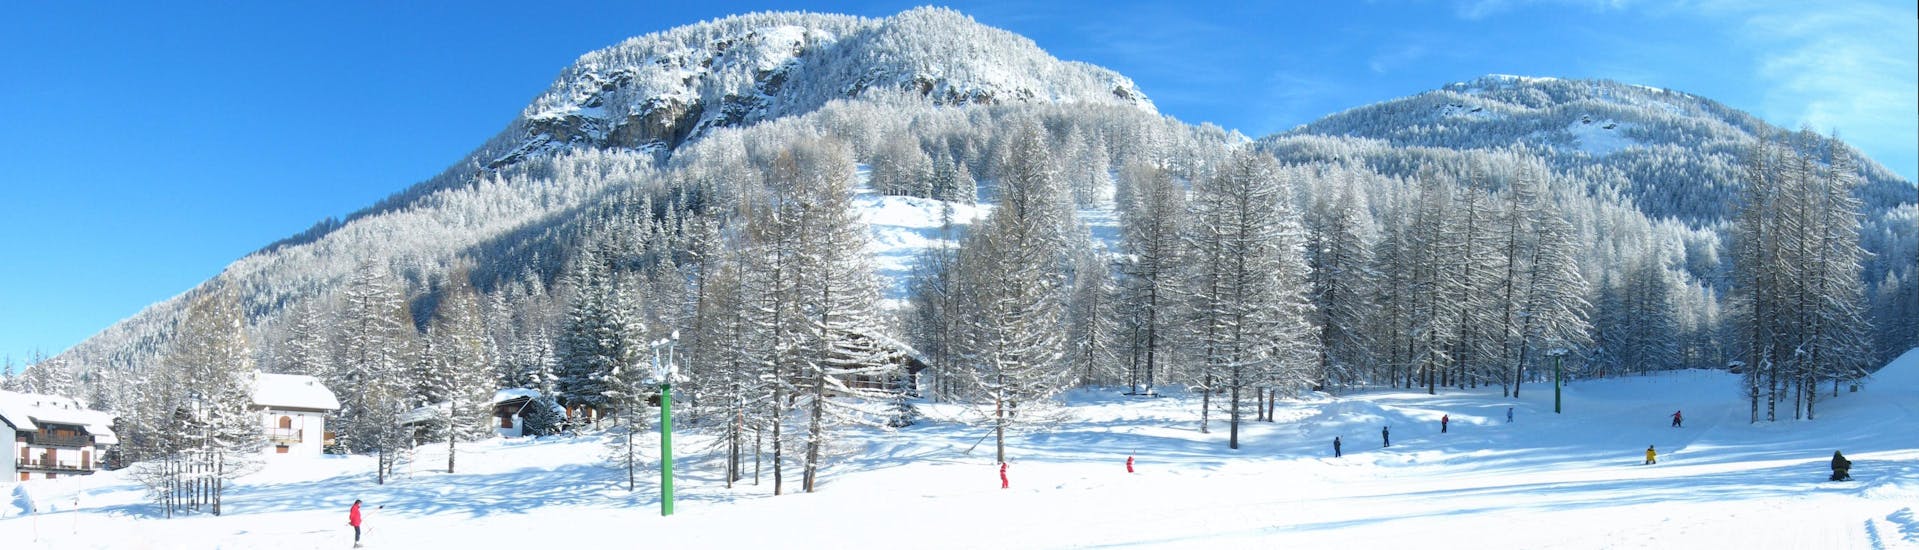 A view of a snowy mountain top in the ski resort of Pragelato, where ski schools gather to start their ski lessons.